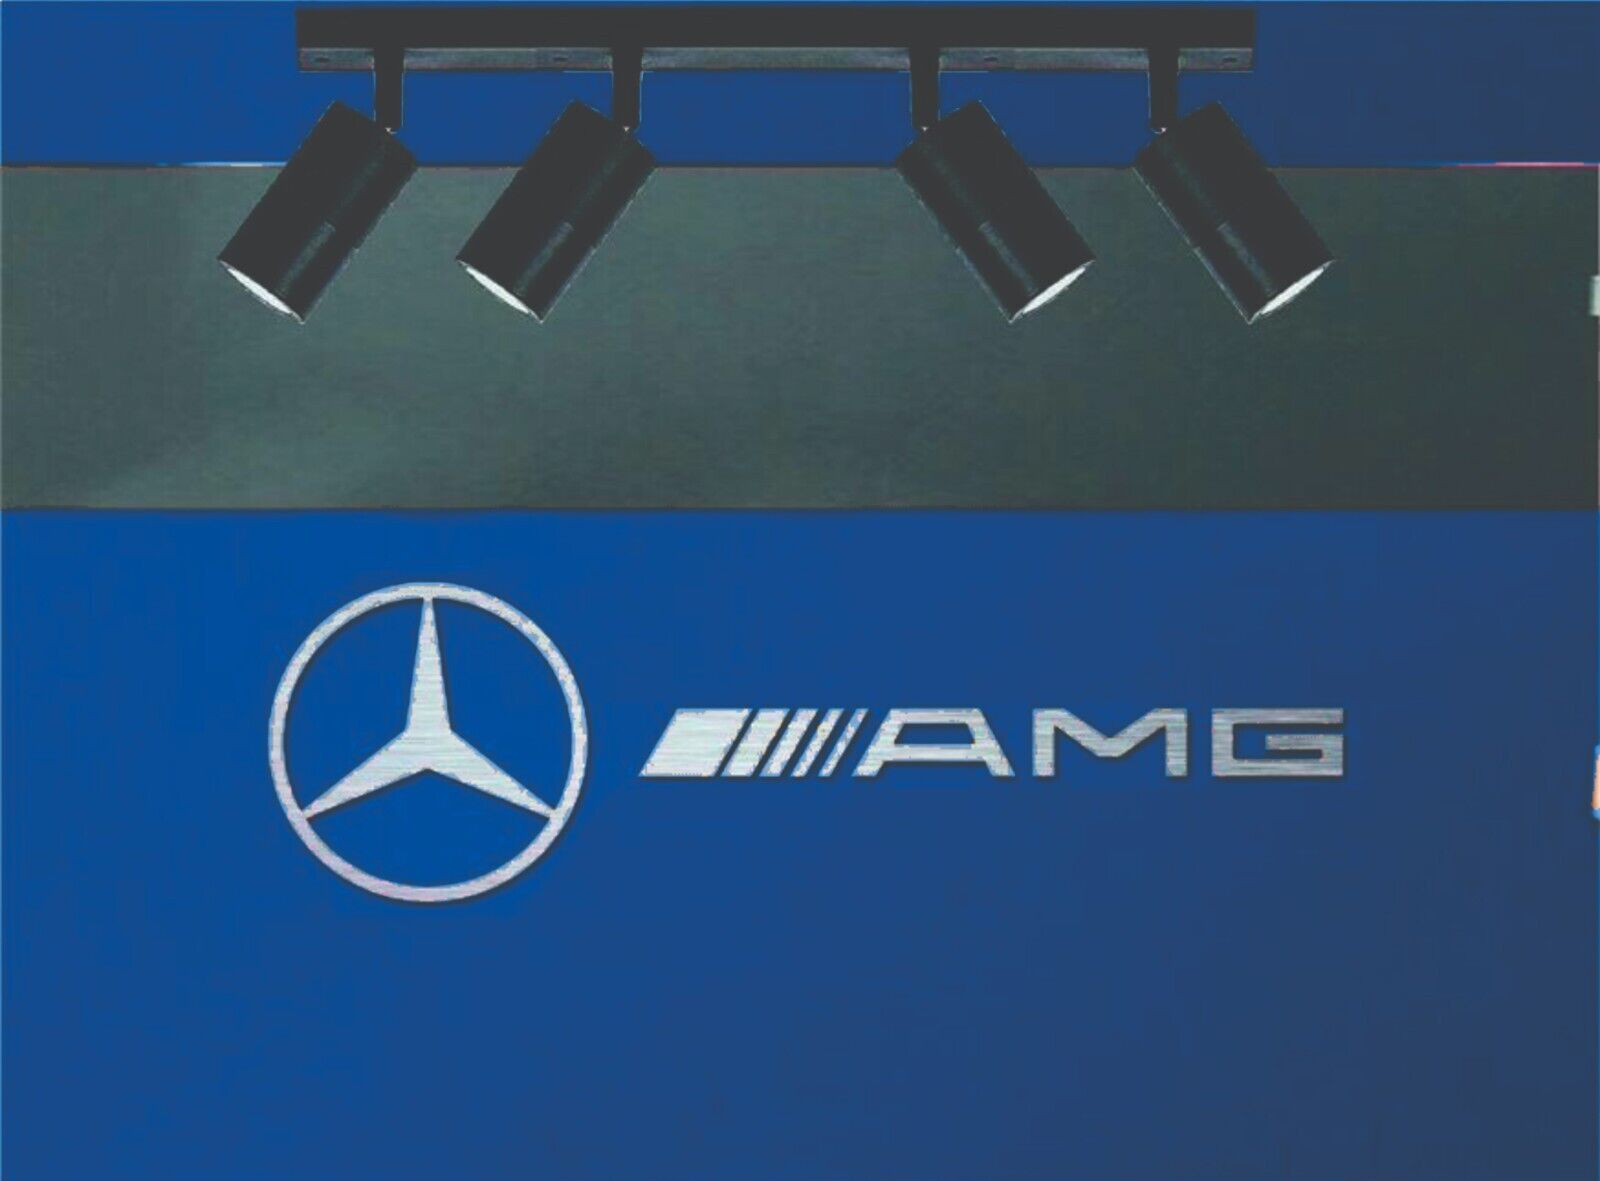 Mercedes, AMG Logo and Lettering, Brushed Aluminum, 6 Feet Wide, Garage Sign